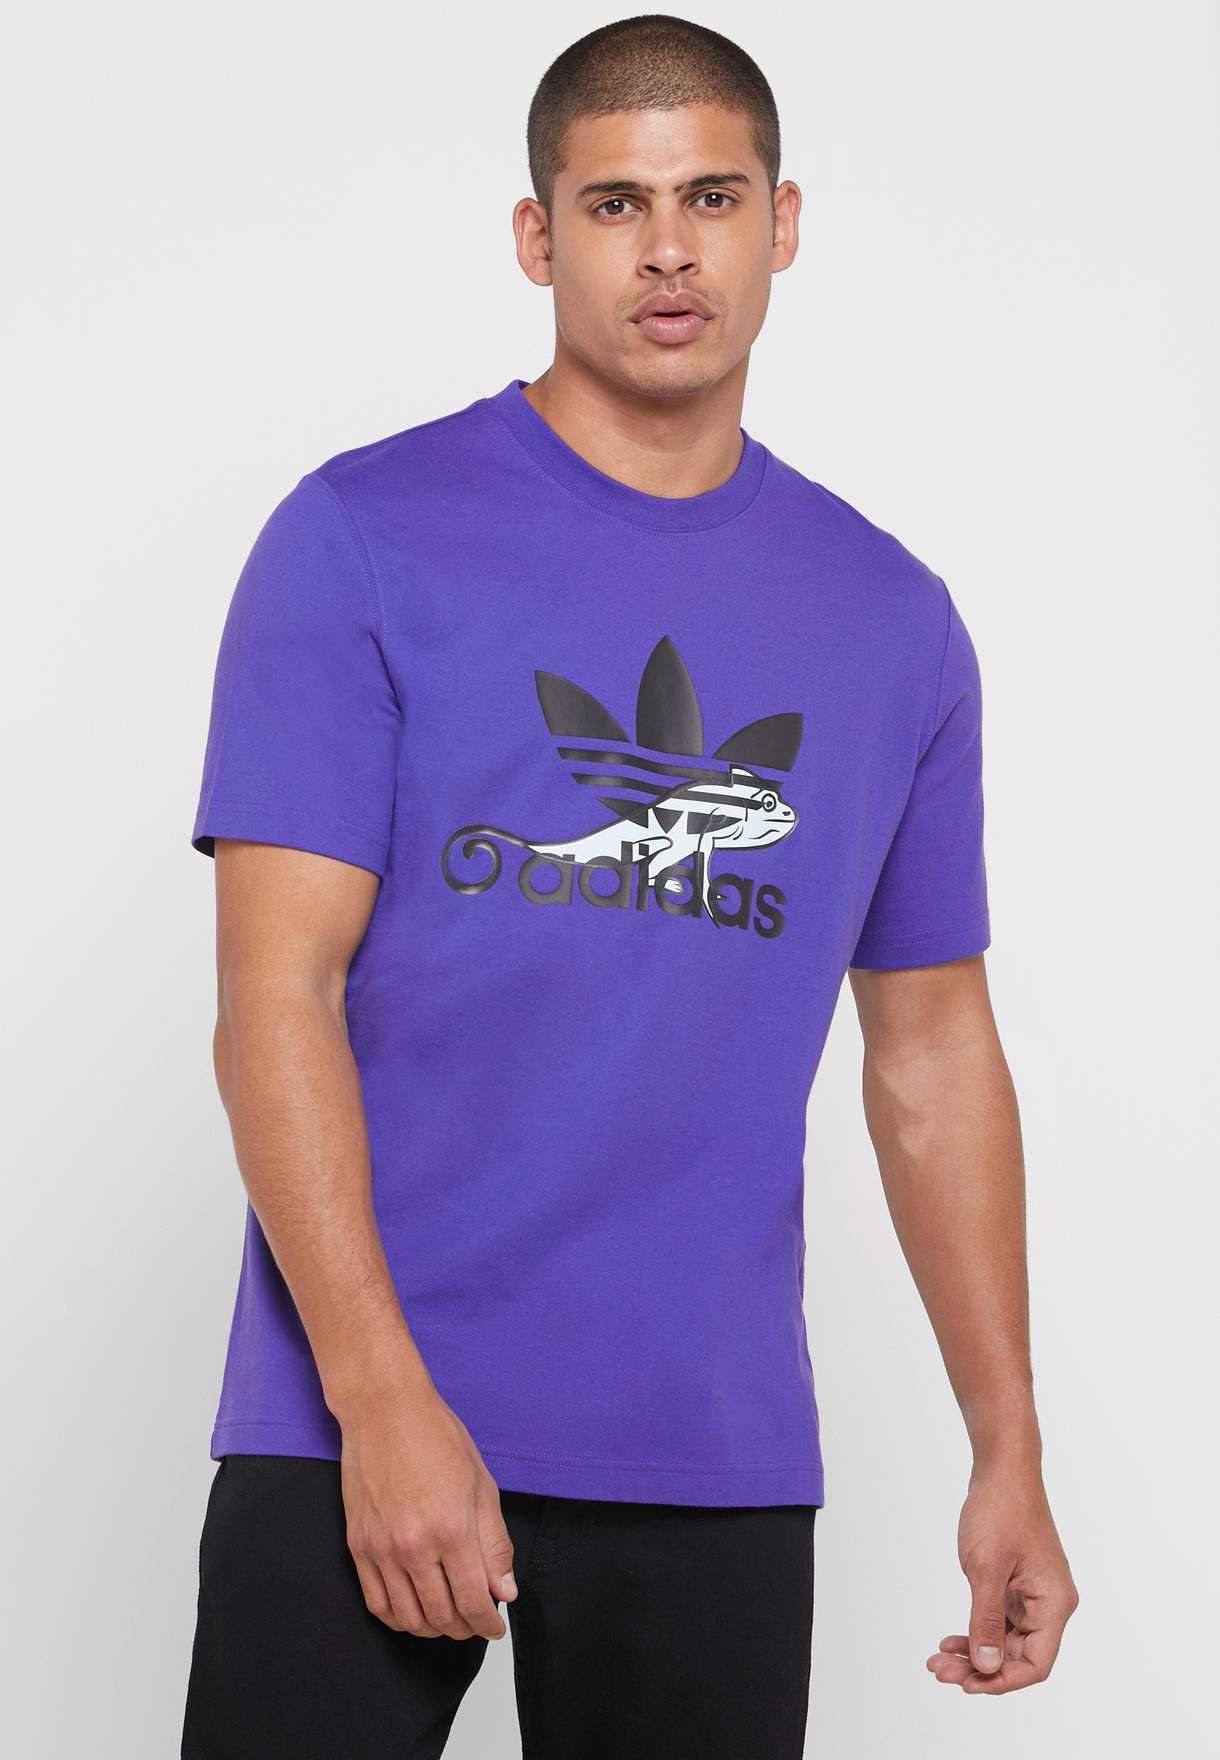 men's purple adidas shirt